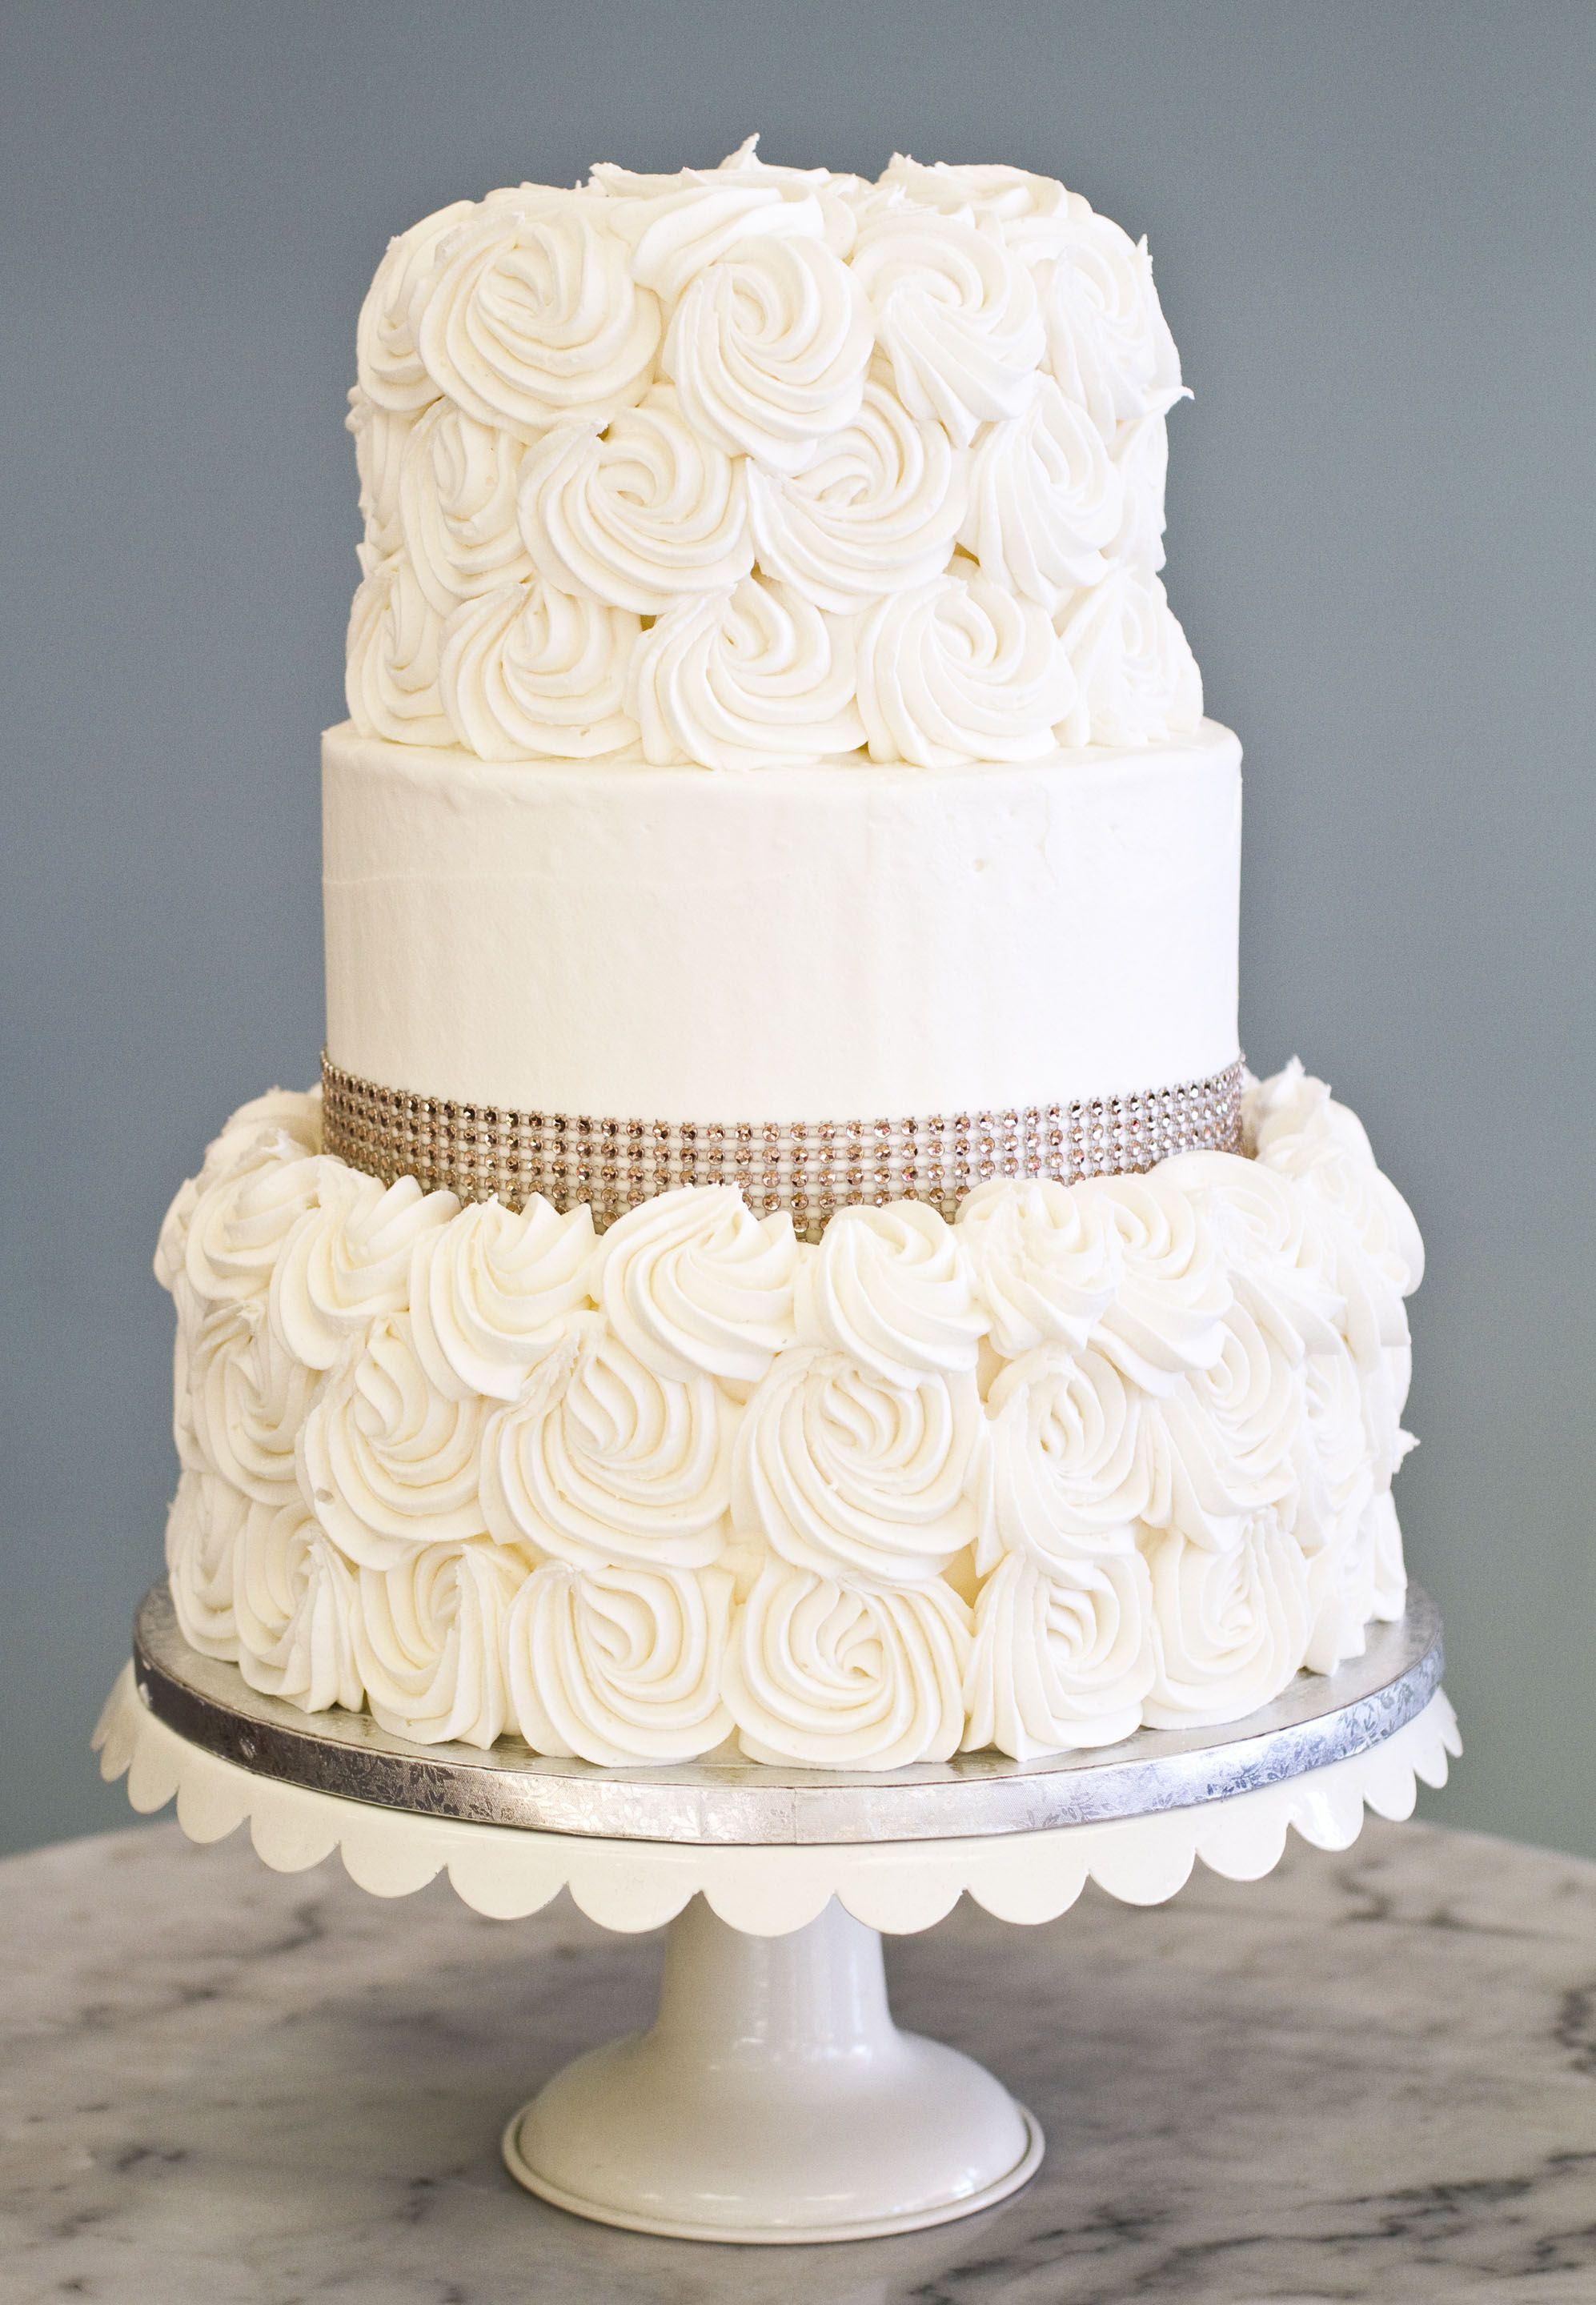 Simple Elegant Wedding Cakes
 A simple elegant wedding cake with rosettes and